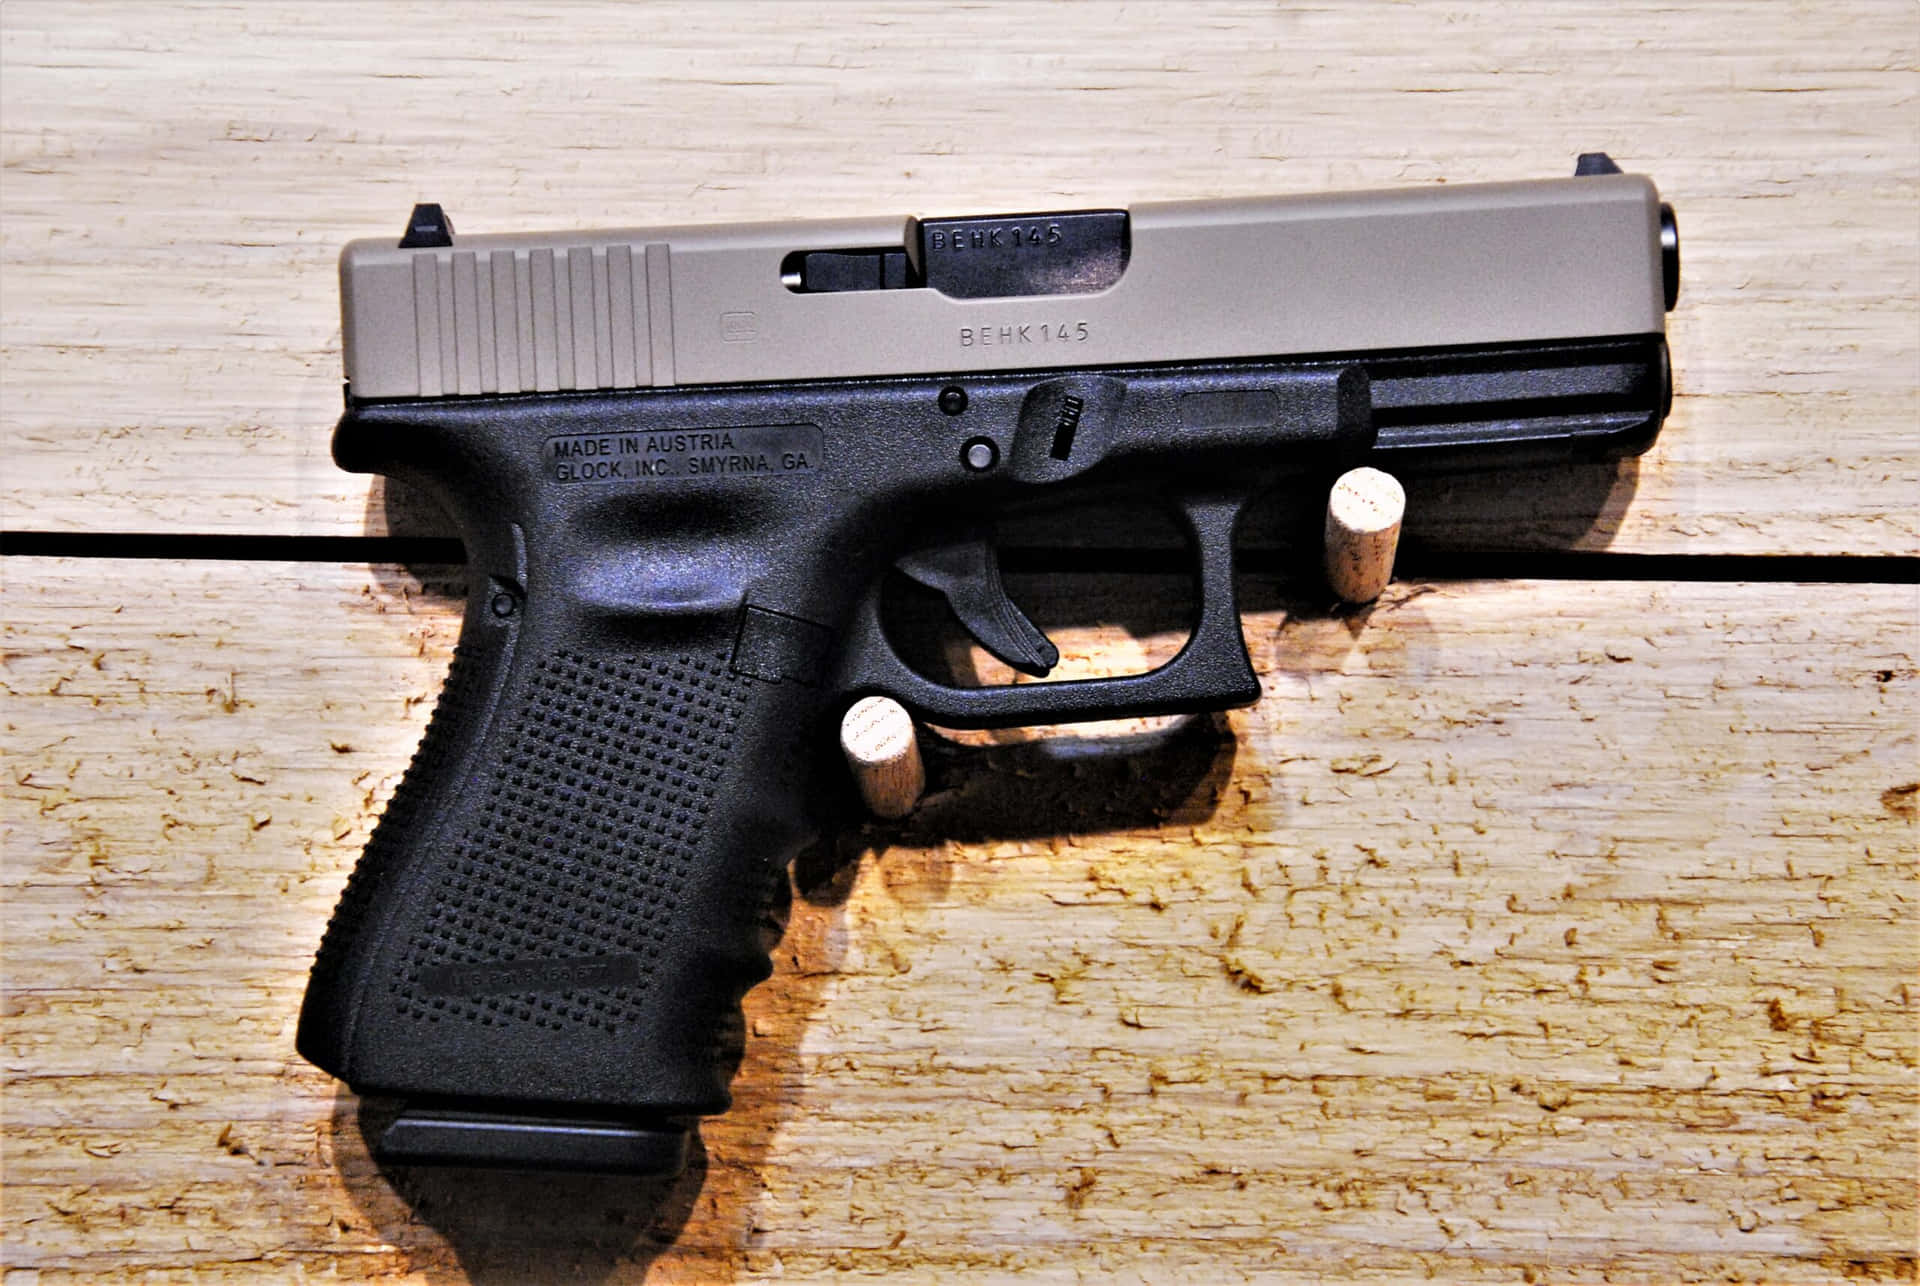 A closeup of a Glock 19 pistol